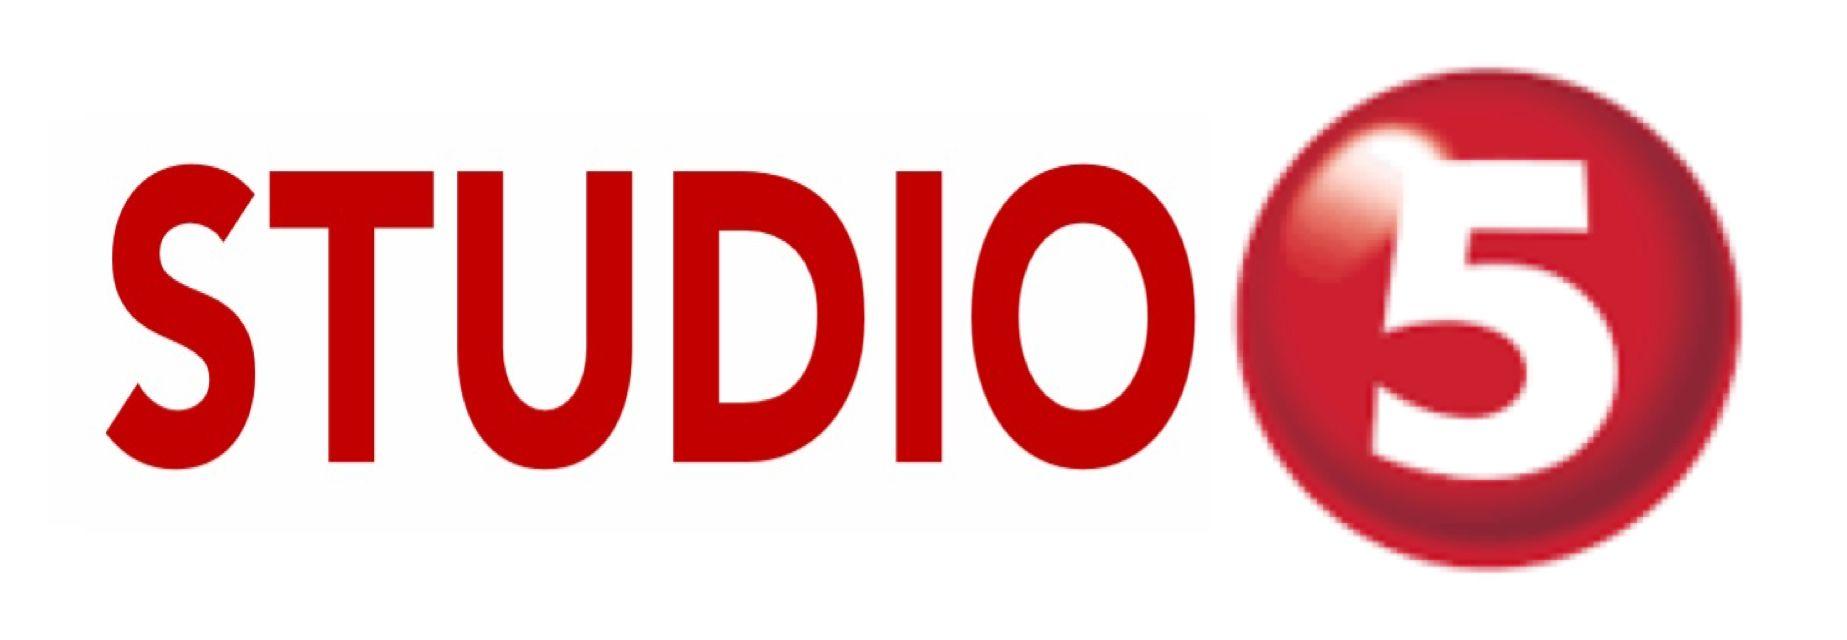 TV5 Logo - Image - TV5 Studio5 2013 logo.jpeg | Logopedia | FANDOM powered by Wikia